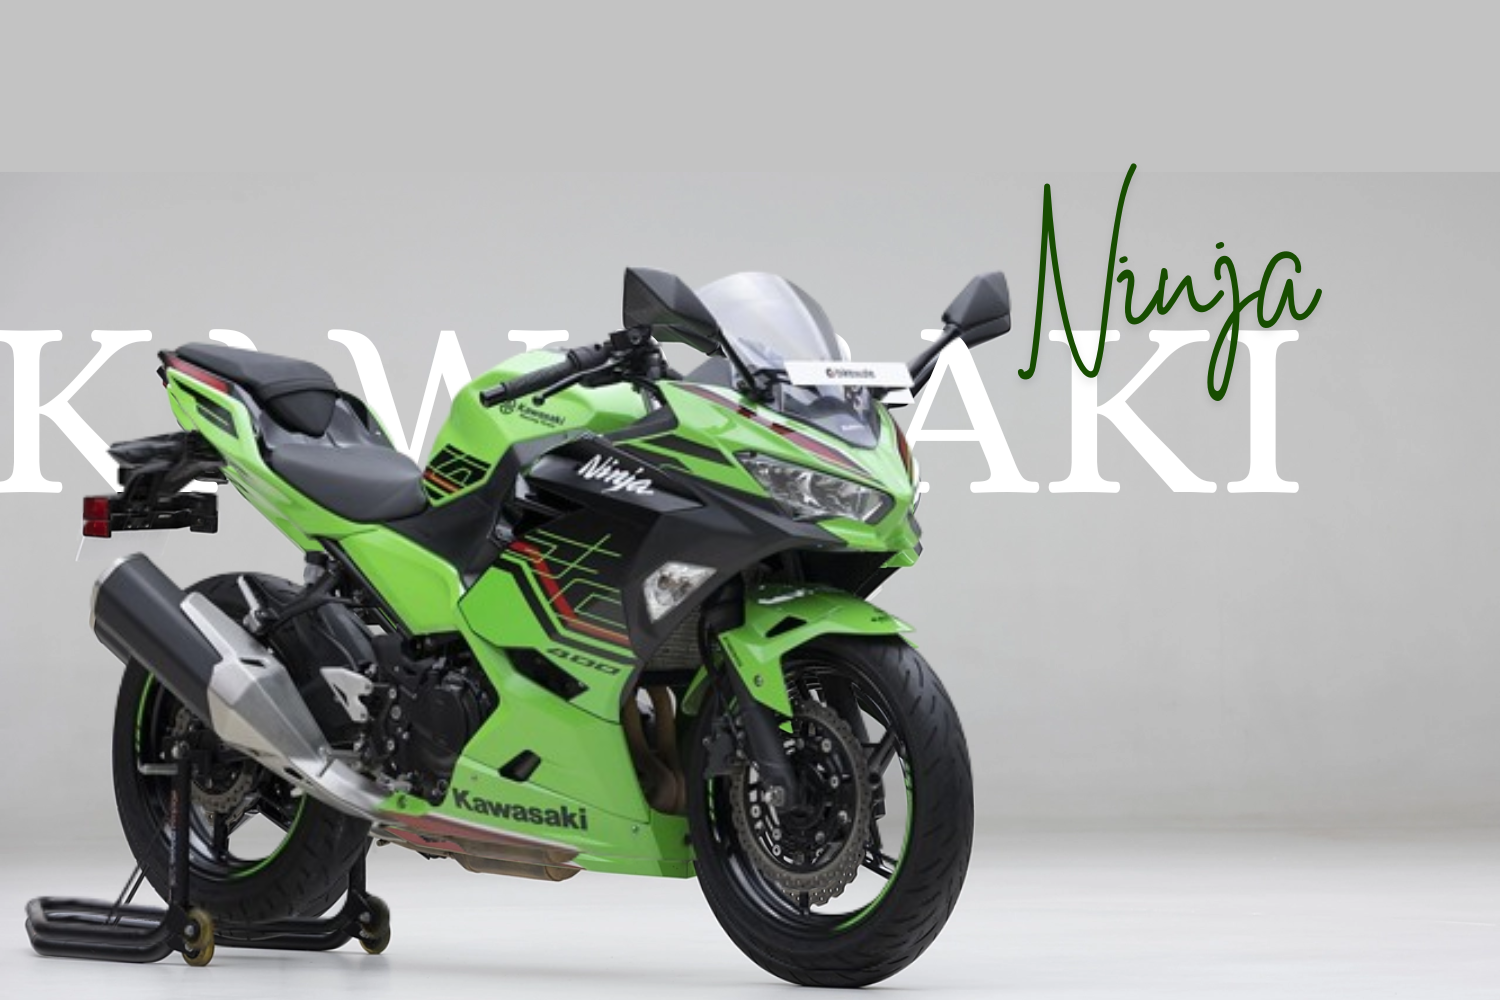 Are you thinking to buy Kawasaki Ninja 400? Warning कृपया beginners दूर रहे